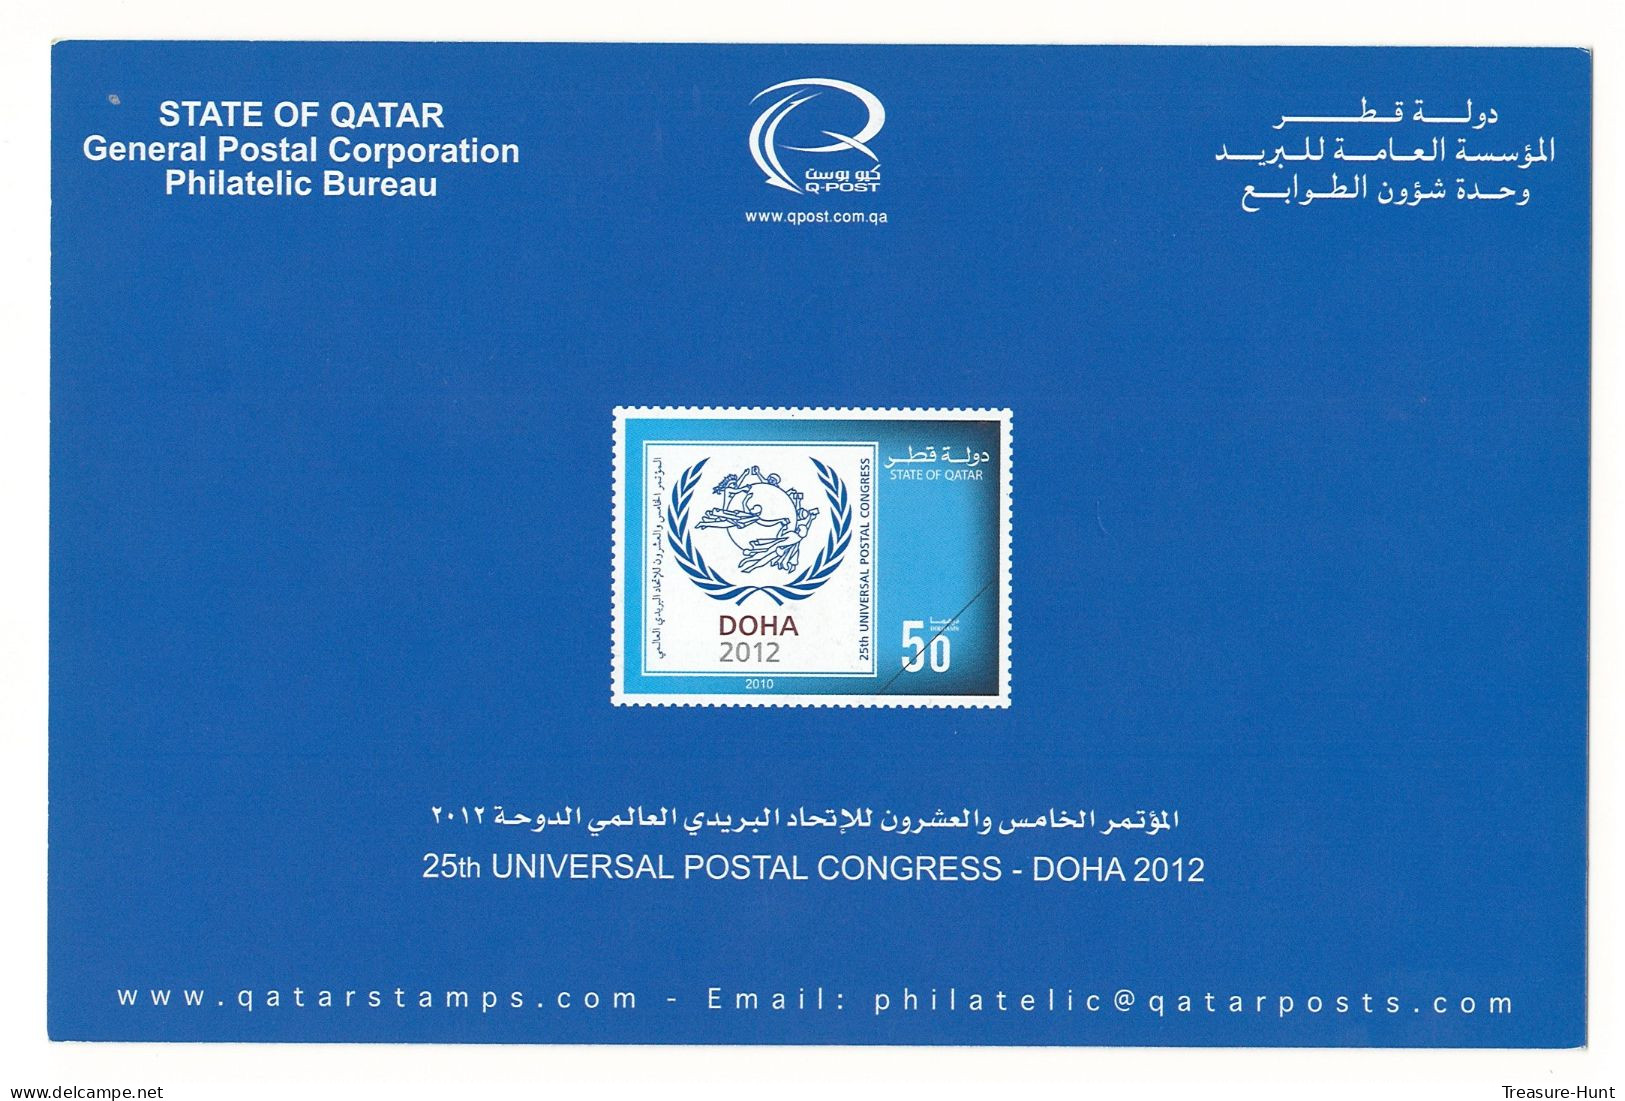 QATAR NEW STAMPS ISSUE BULLETIN / BROCHURE / POSTAL NOTICE - 2010 UPU CONGRESS IN DOHA UNIVERSAL POSTAL UNION LOGO - Qatar